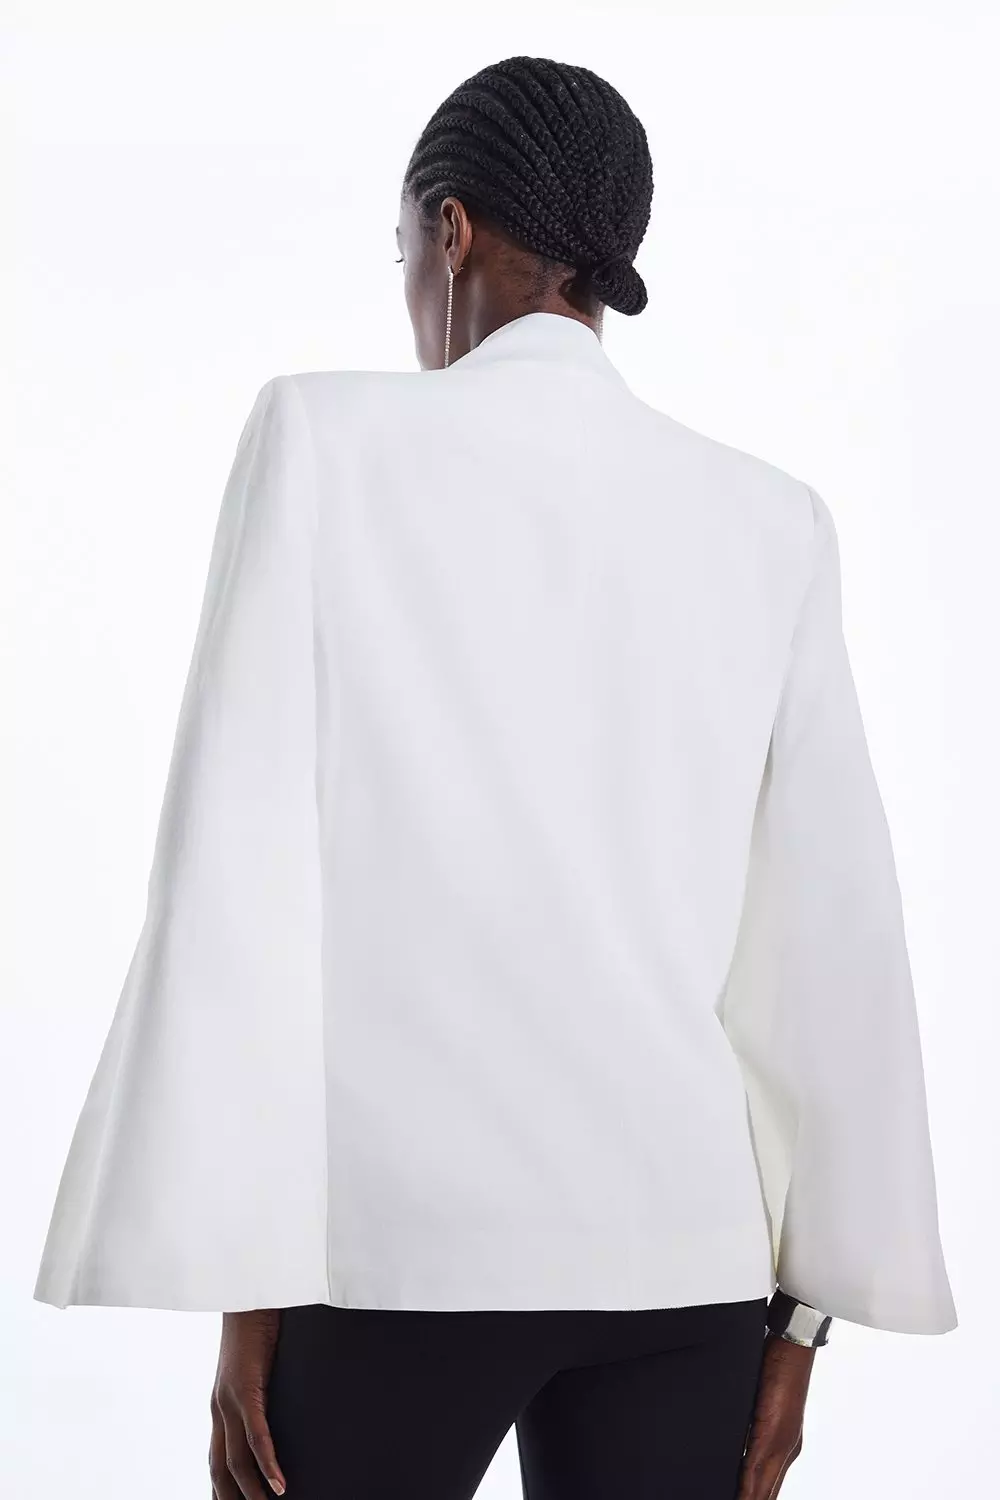 KAREN MILLEN Cape Sleeve Notch Neck Jacket in Ivory